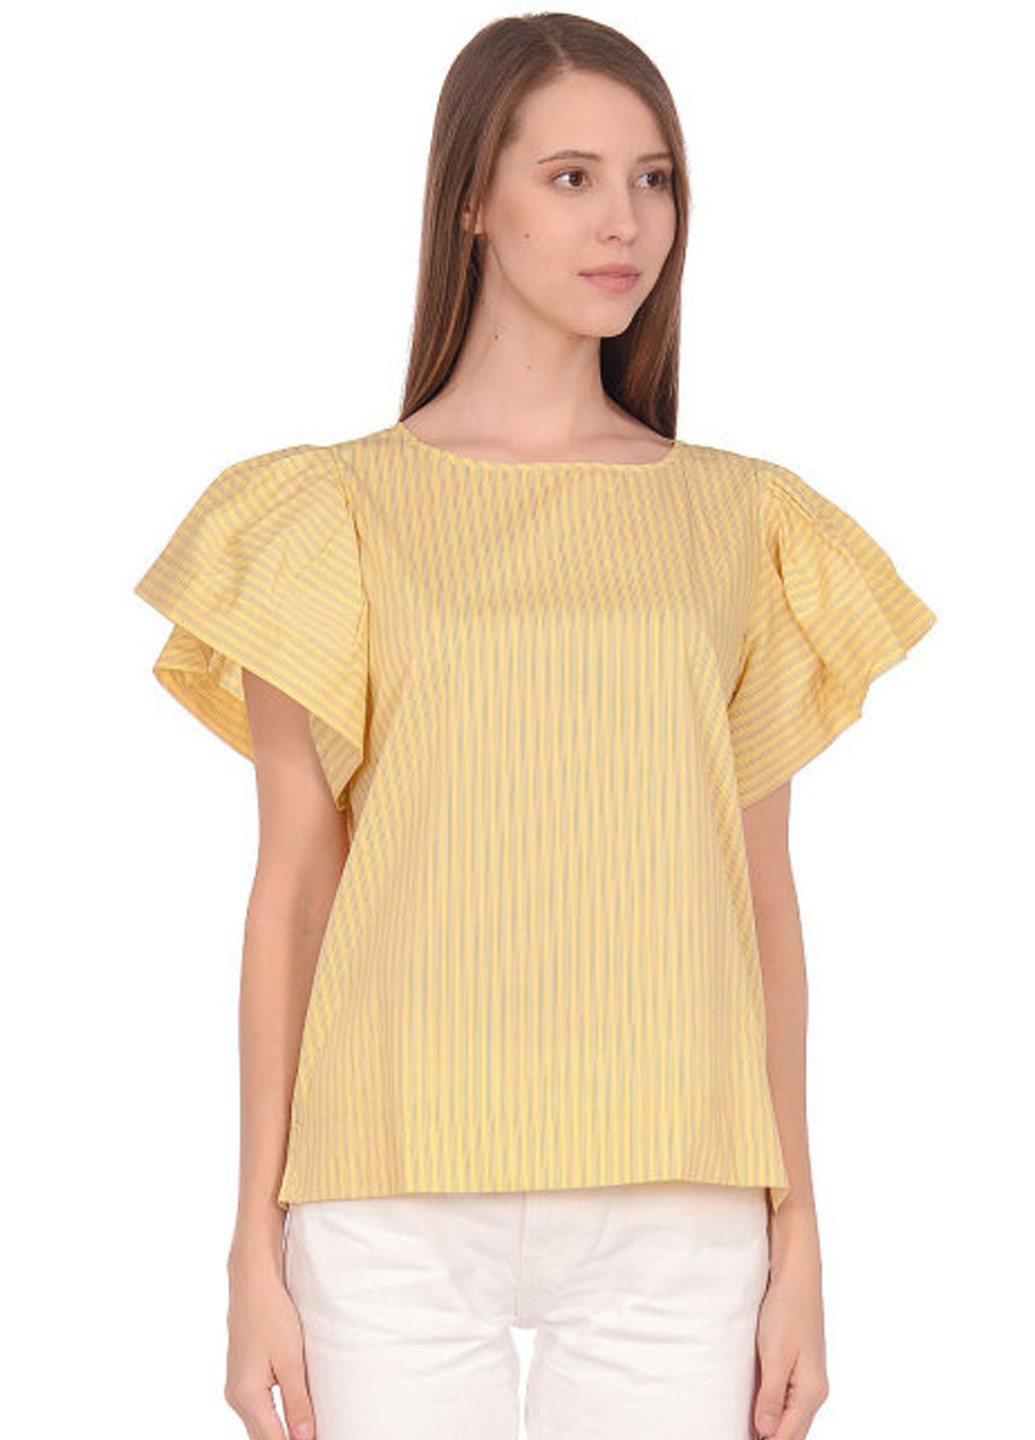 Желтая демисезонная блуза United Colors of Benetton